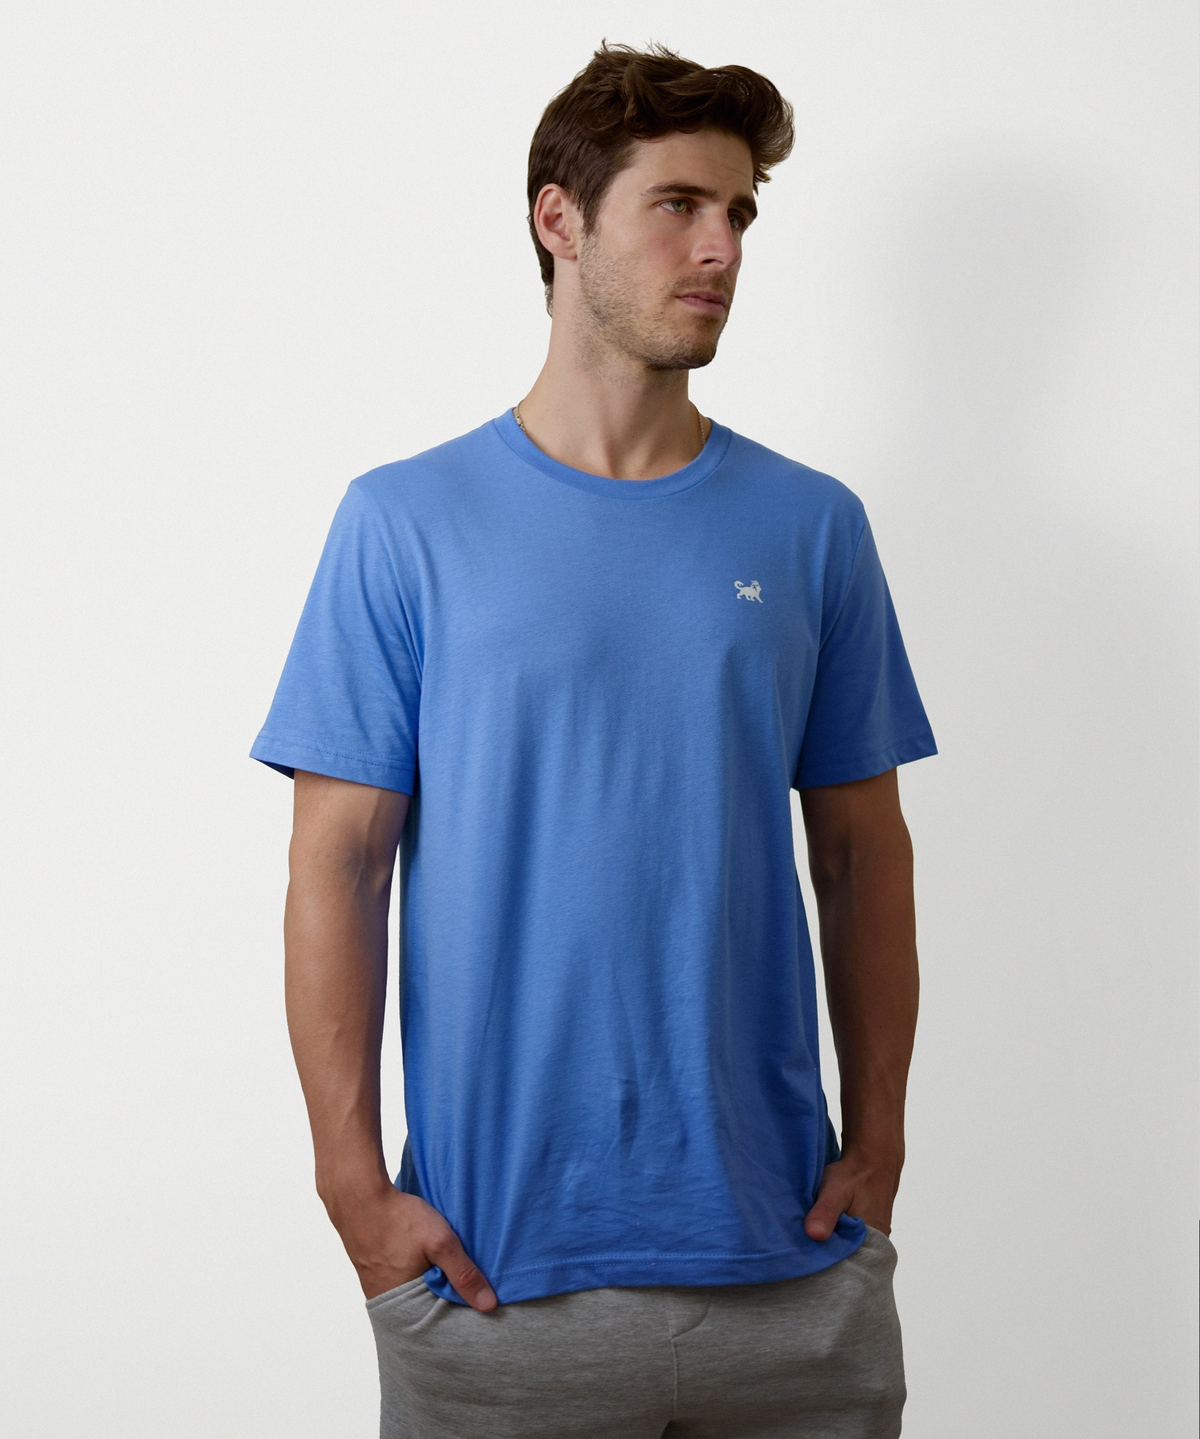 Signature Short Sleeve T-Shirt for Men (Columbia Blue)